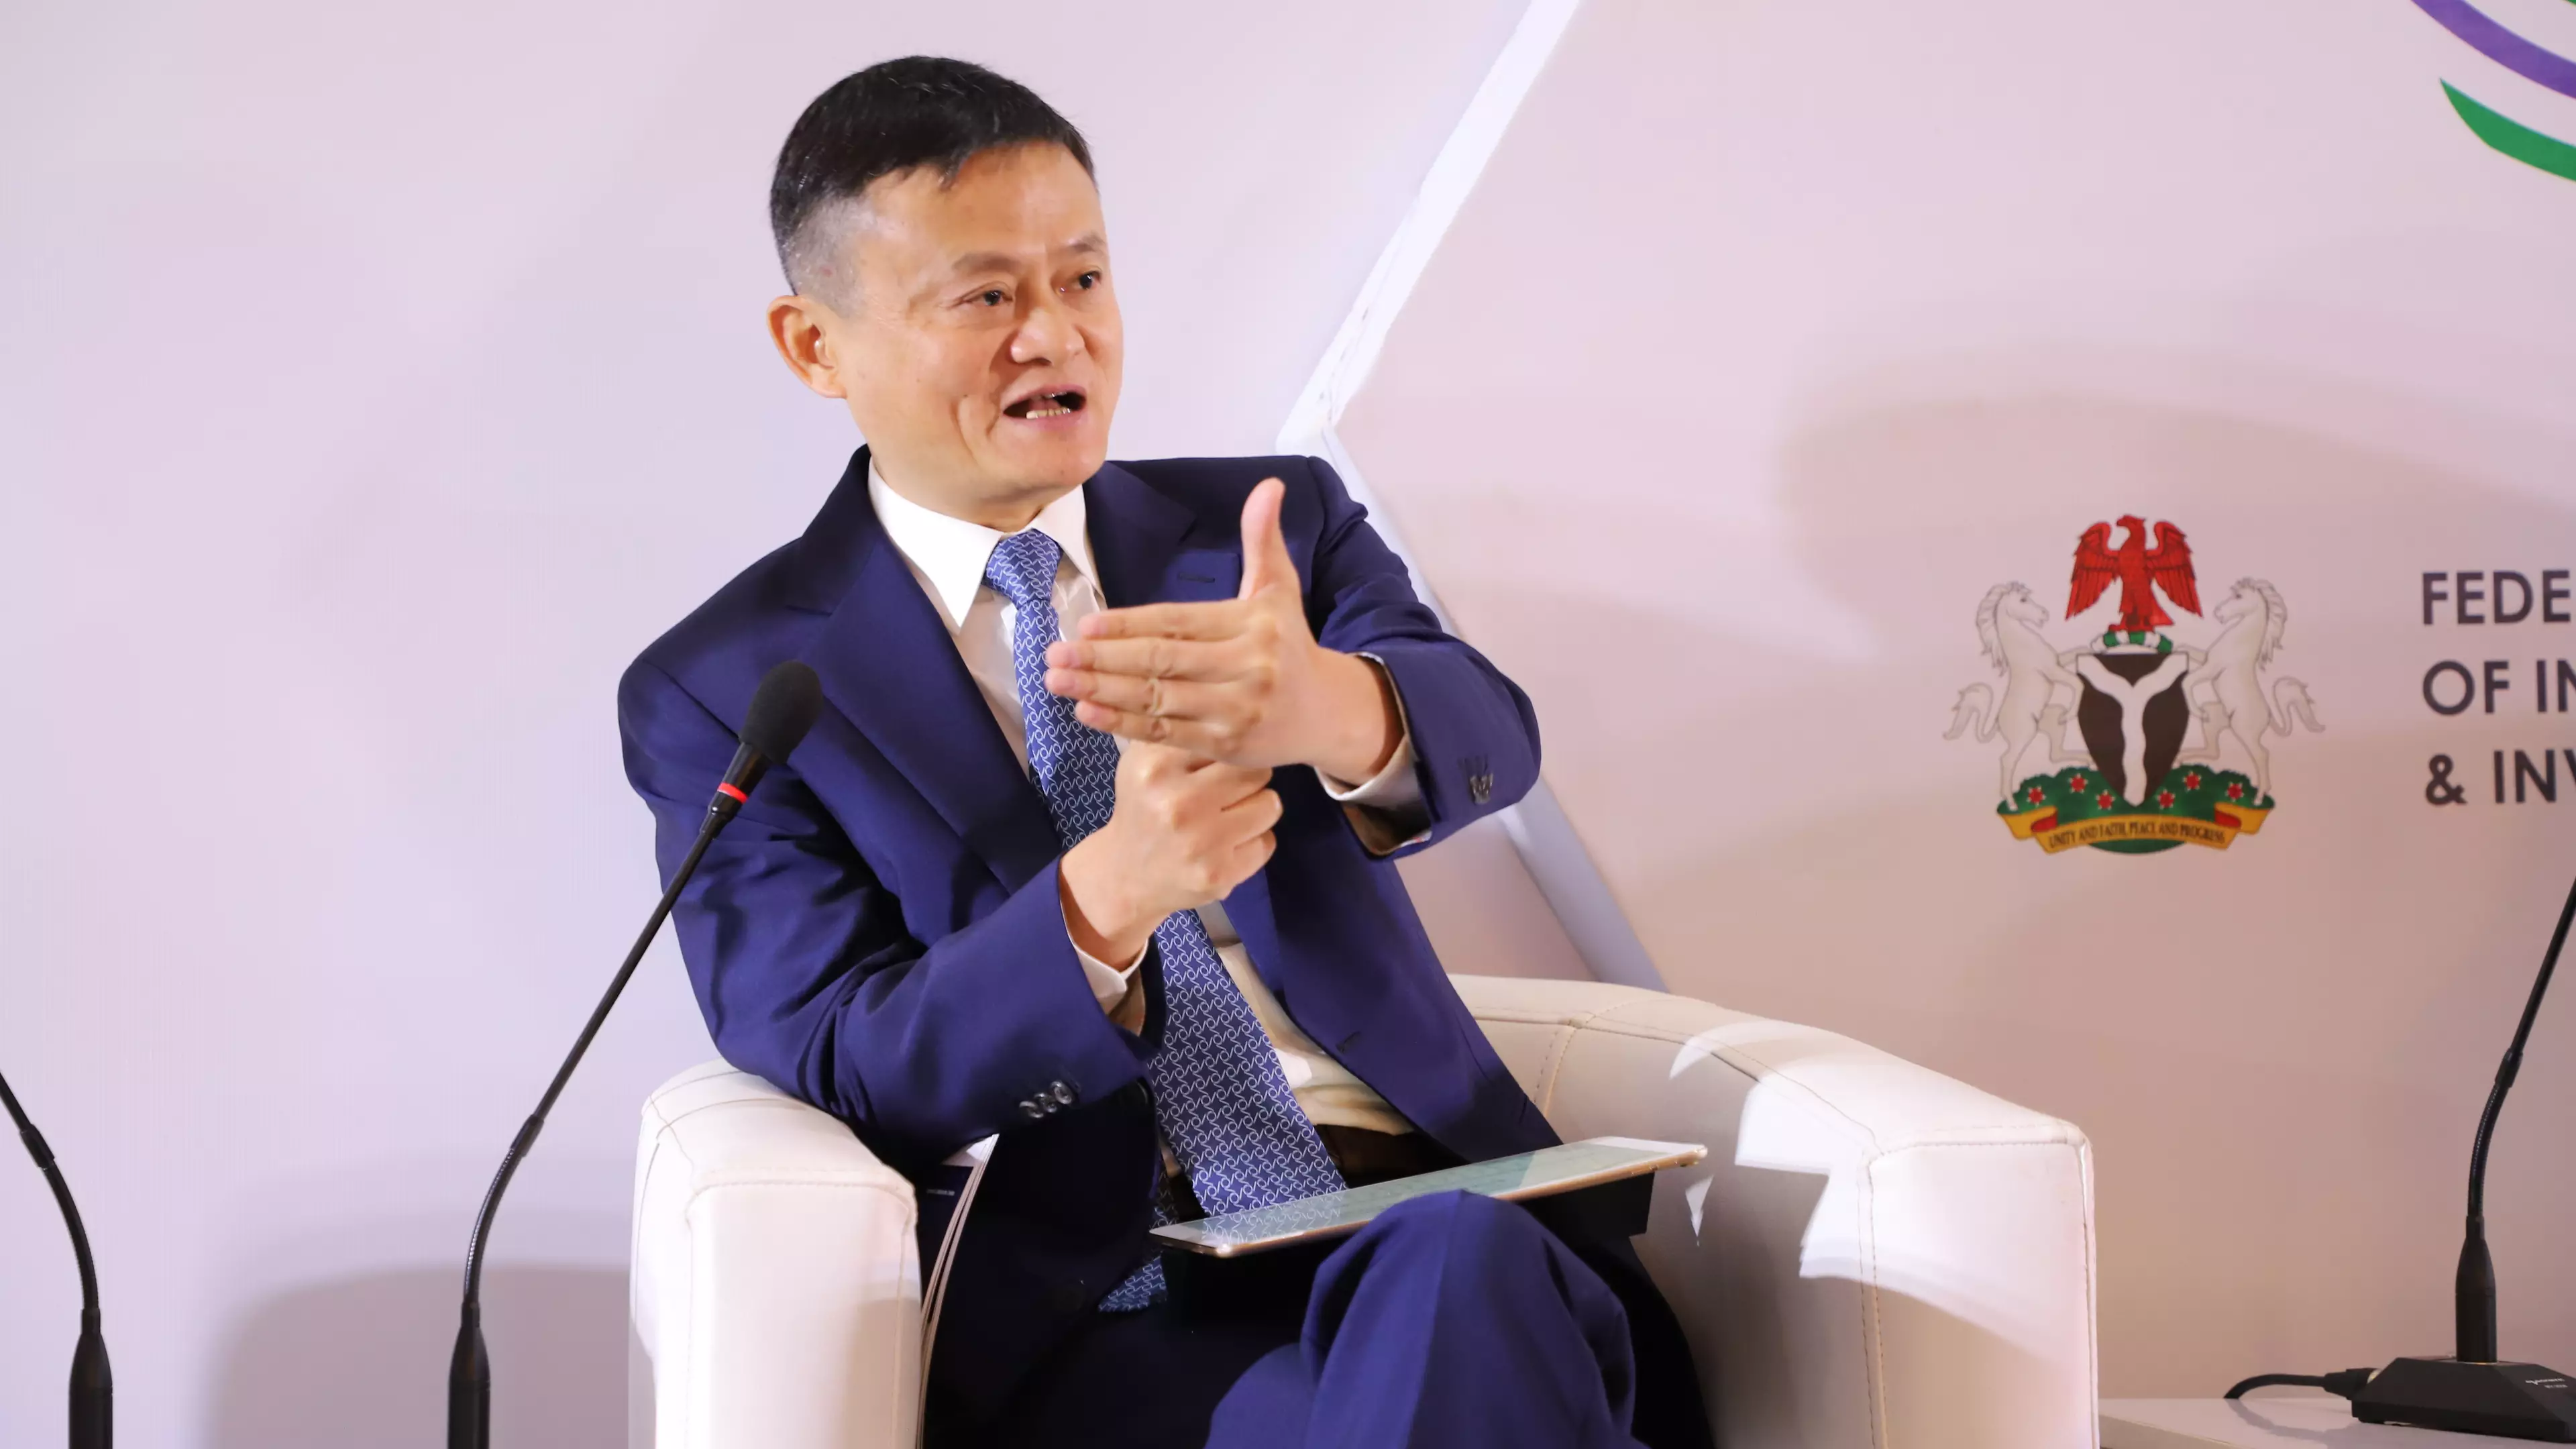 China's Richest Man Jack Ma Donates 1M Face Masks And 500K Coronavirus Test Kits To US